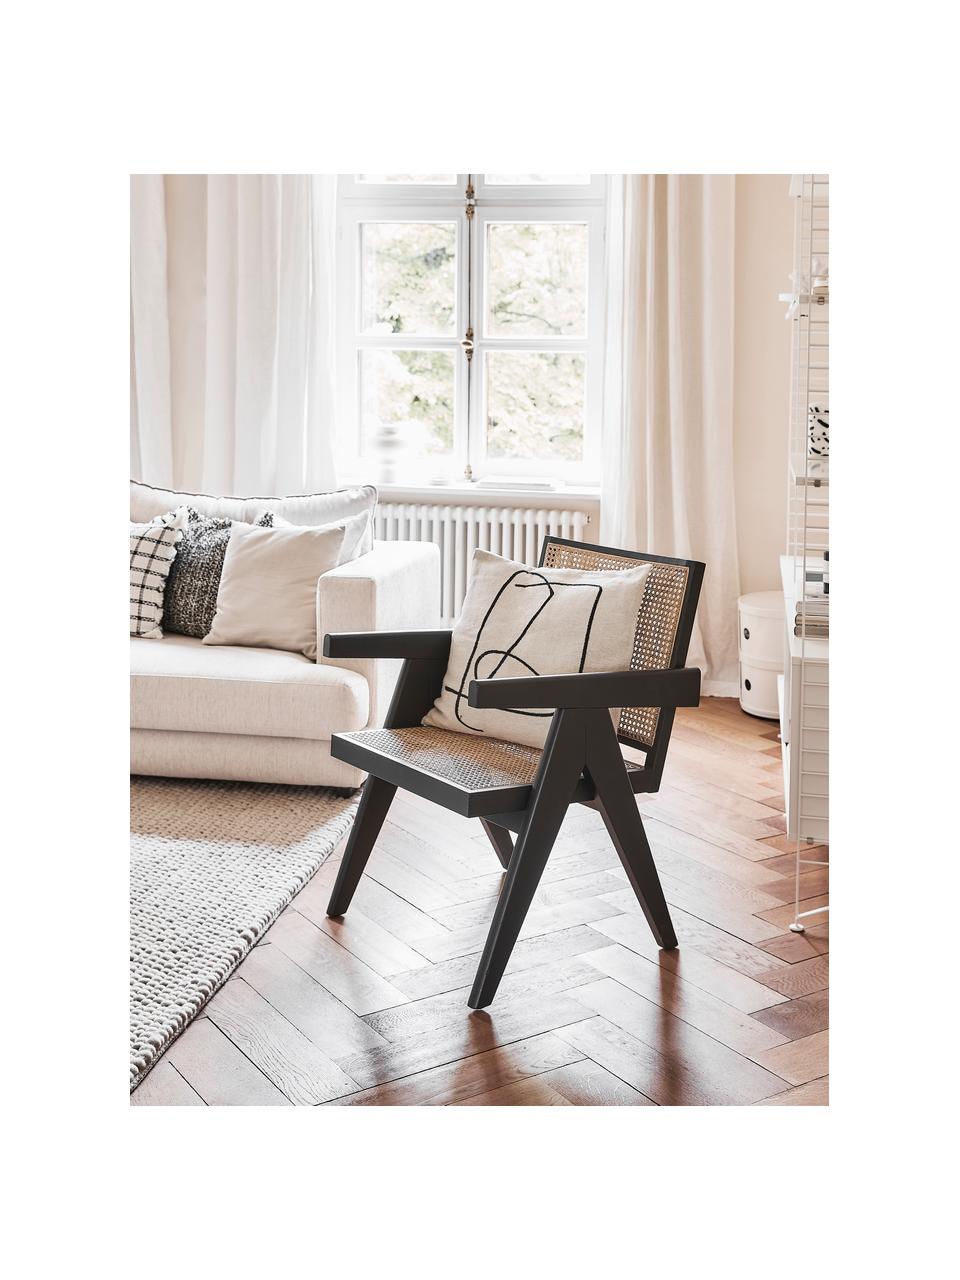 Loungefauteuil Sissi met Weens vlechtwerk, Frame: massief eikenhout, Zitvlak: rotan, Zwart, B 58 x D 66 cm